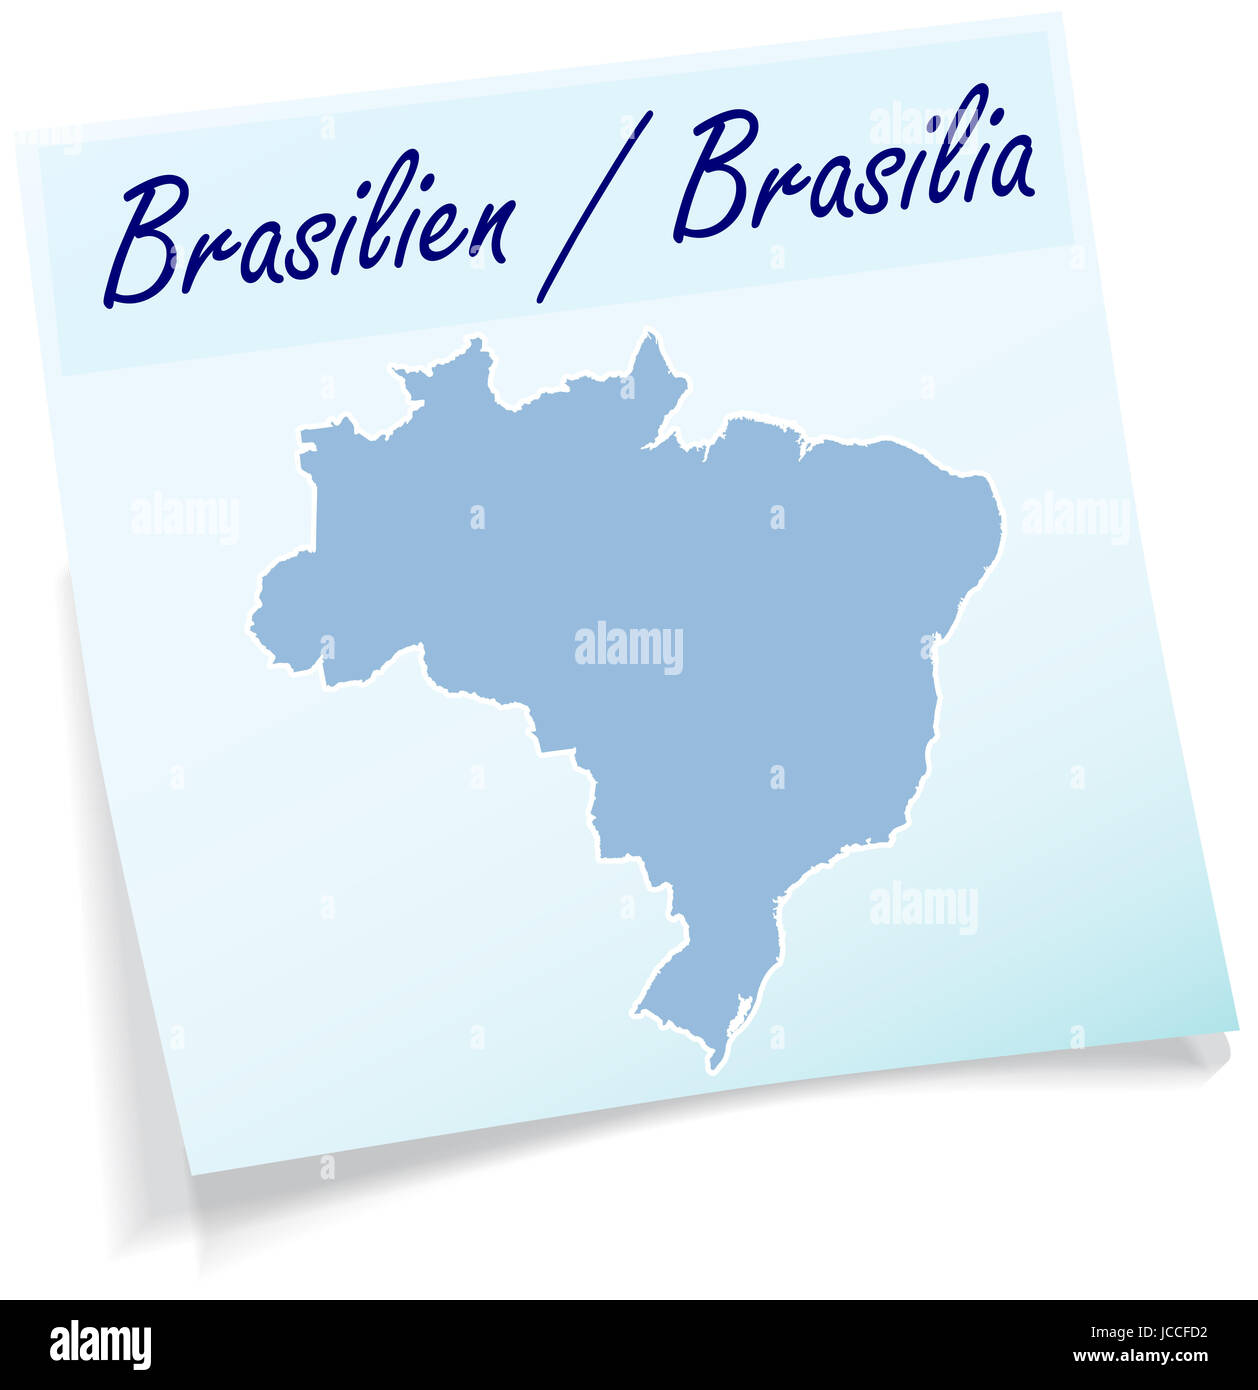 Brasilien als Notizzettel in Blau Stock Photo